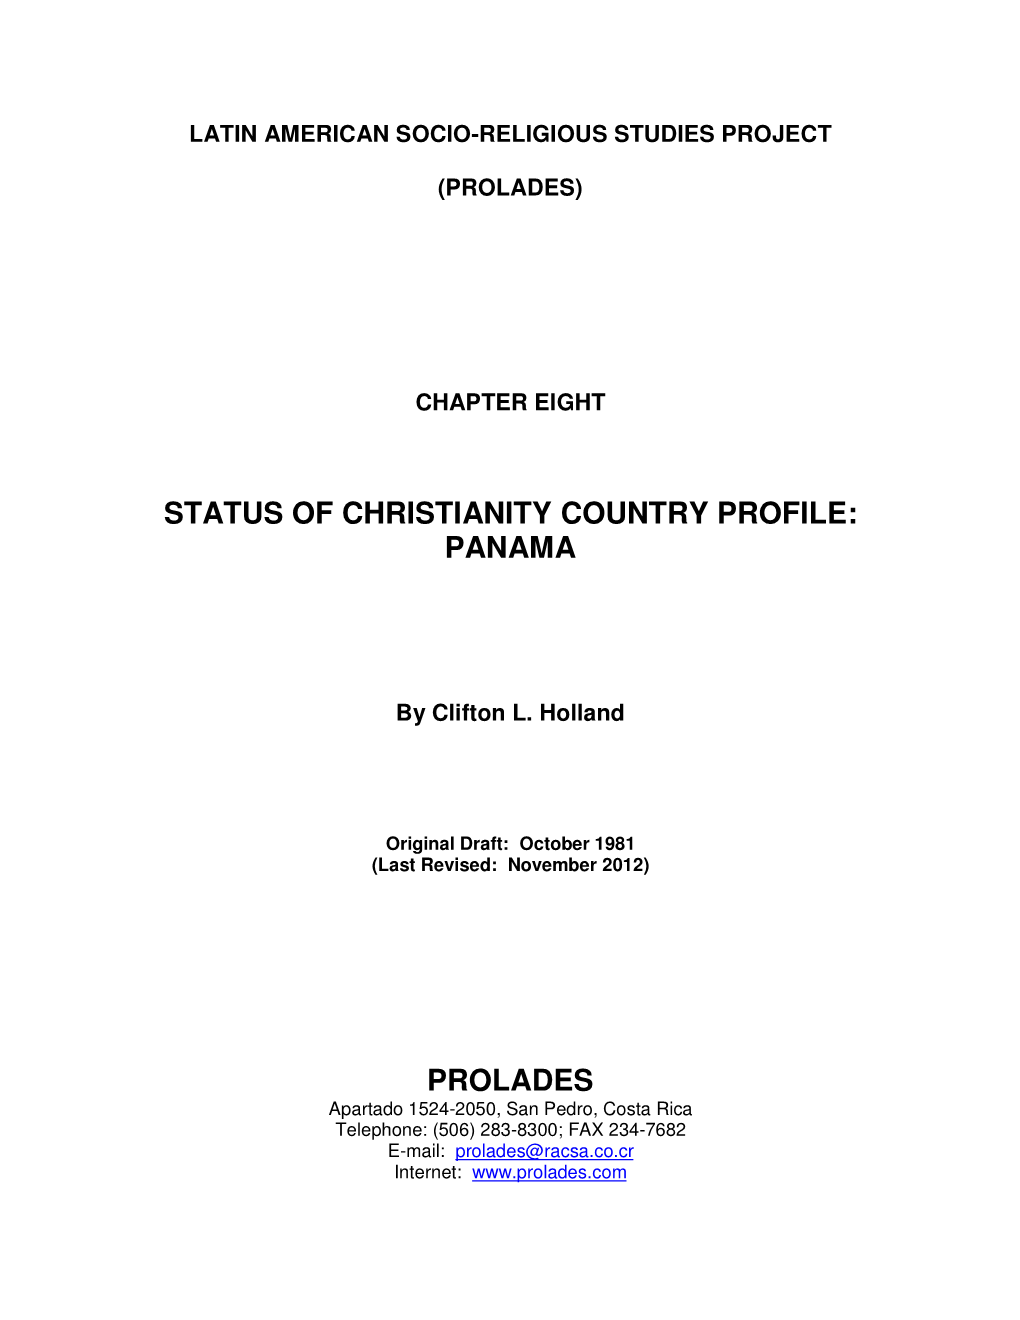 Status of Christianity Country Profile: Panama